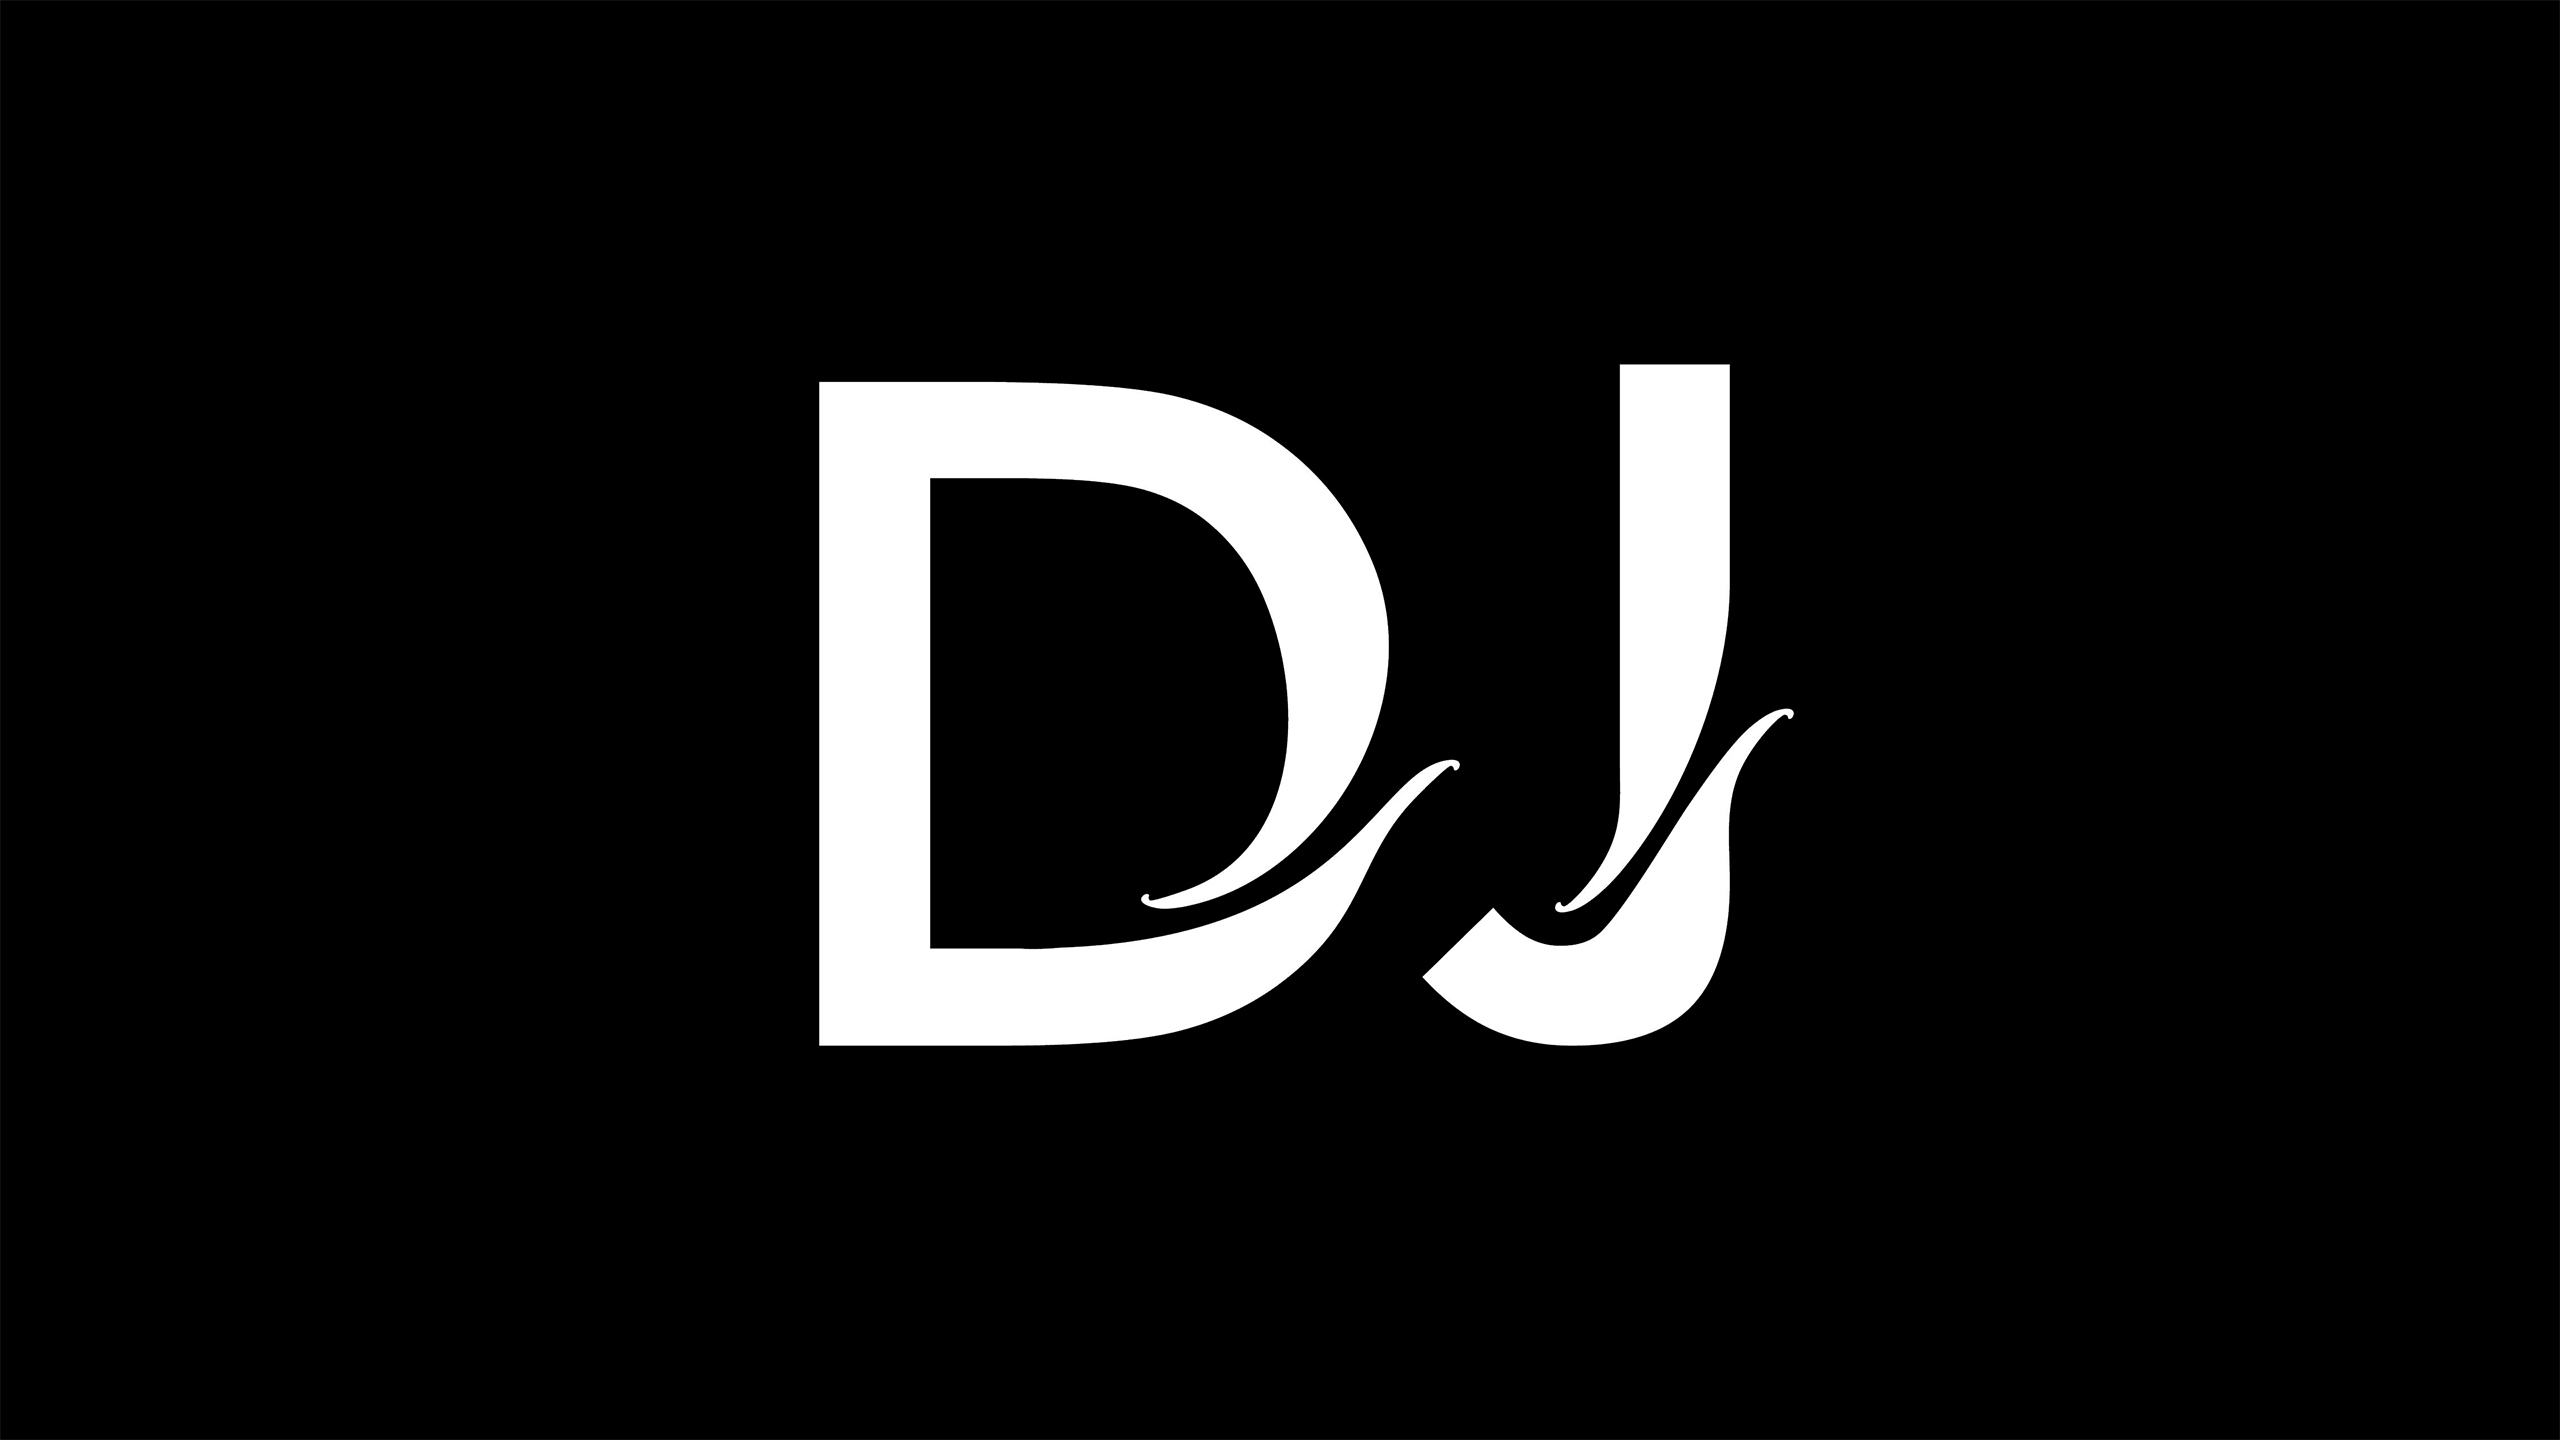 DJ Logo Wallpapers - FunDJStuff.com